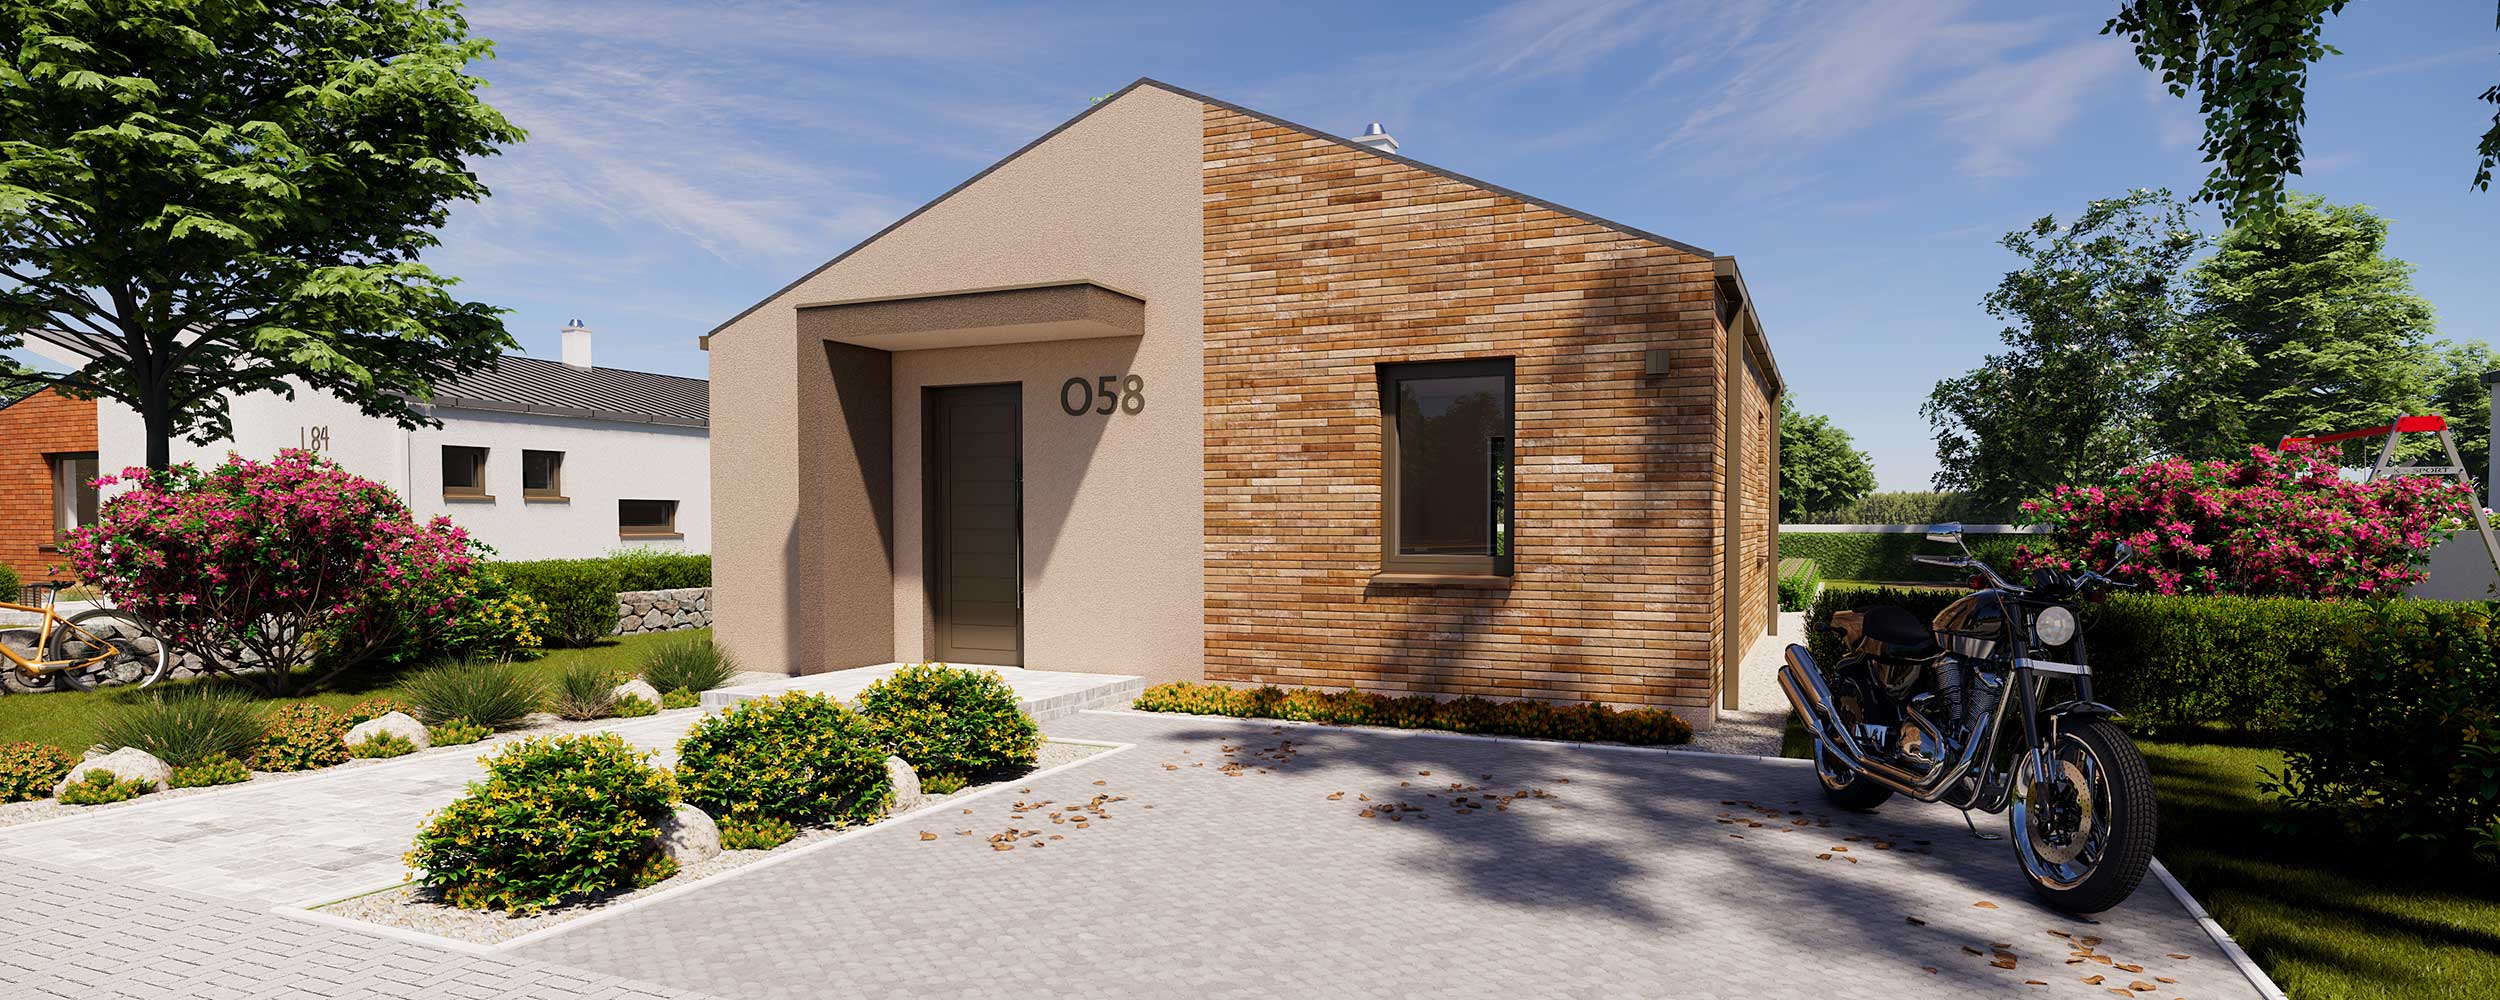 Projekt bungalovu O58